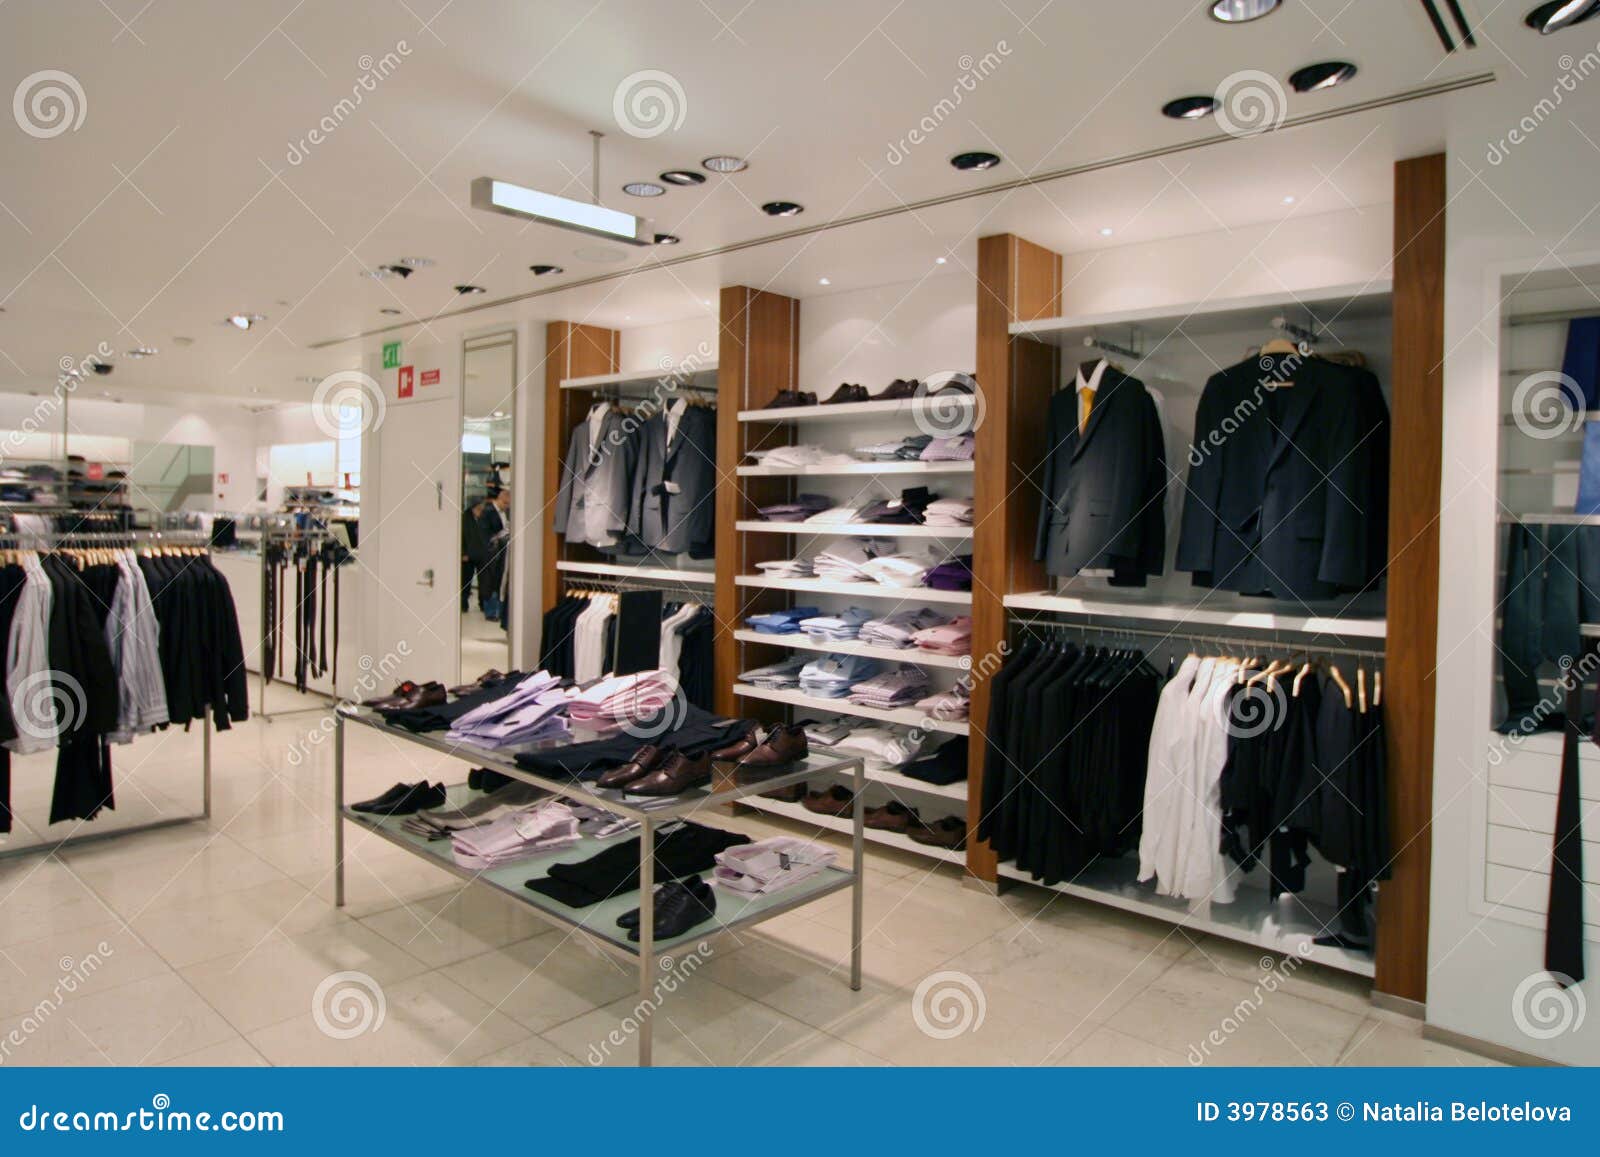 men clothing shop 3978563